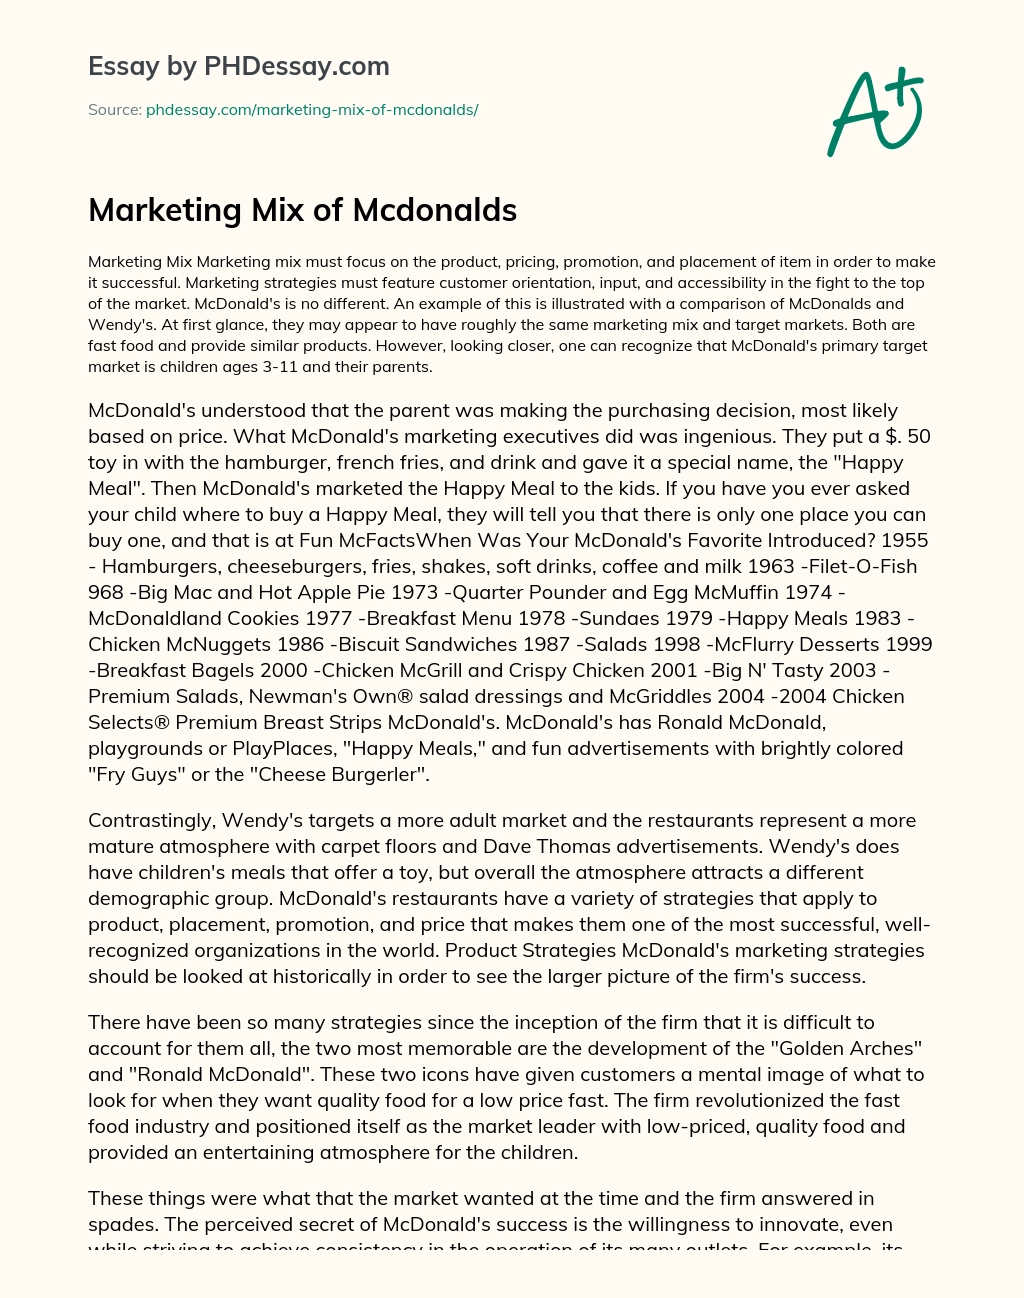 Marketing Mix of Mcdonalds essay